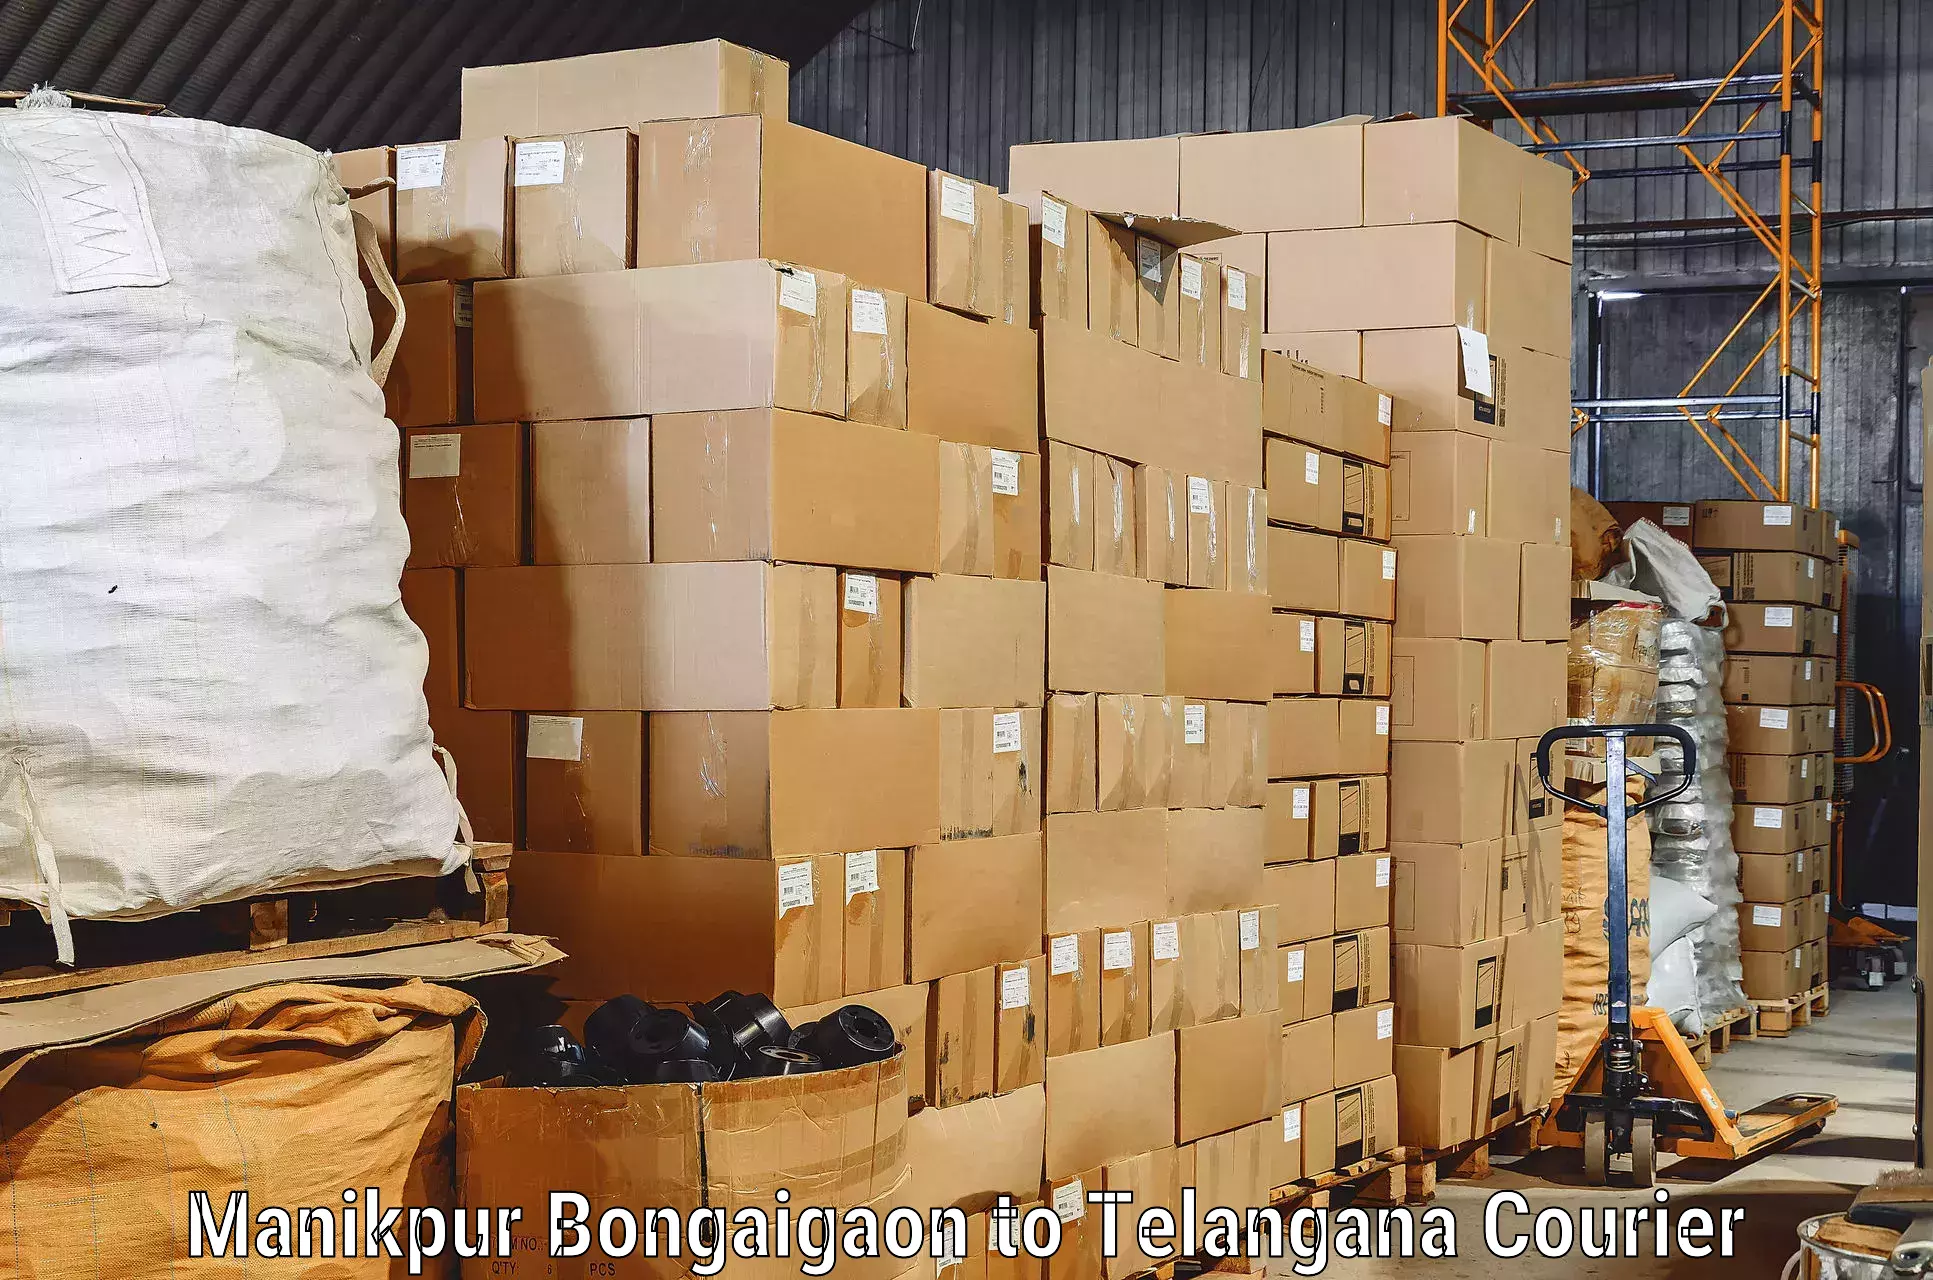 Moving and packing experts Manikpur Bongaigaon to Wanaparthy